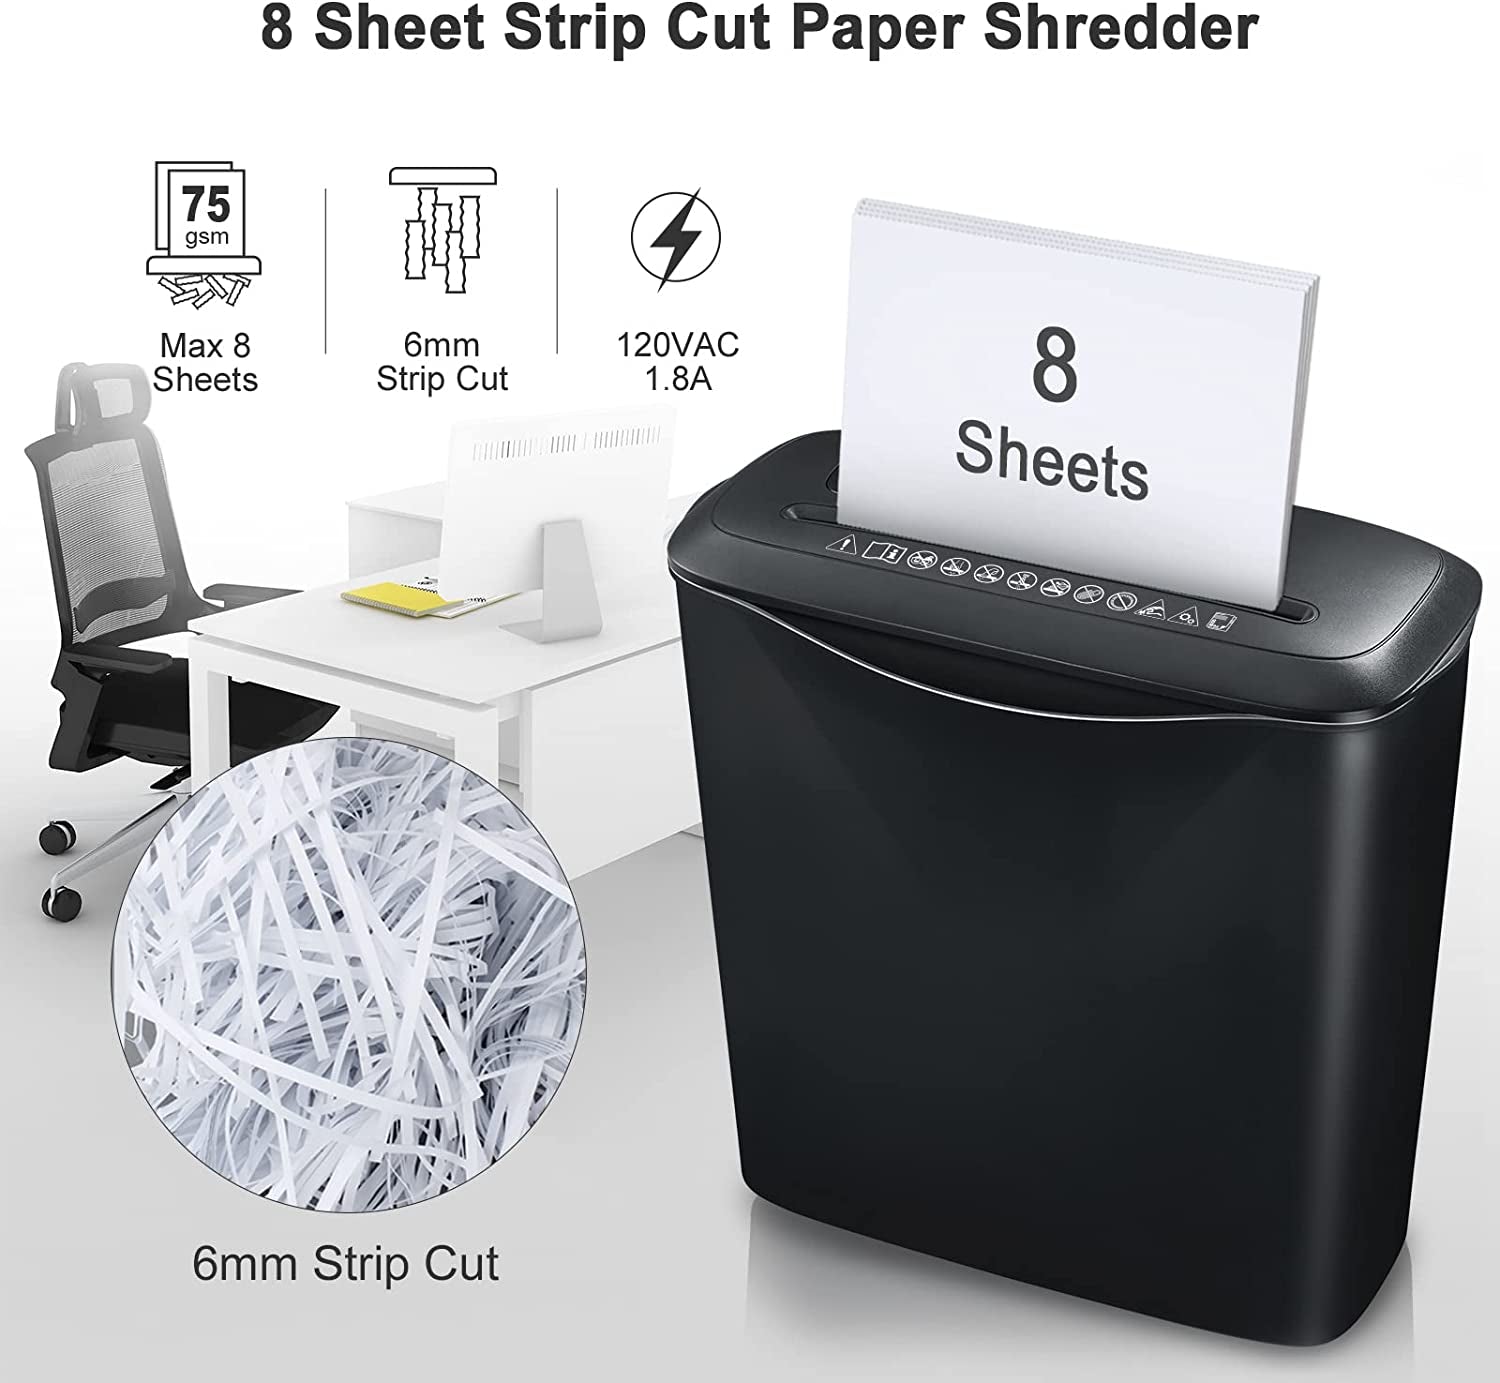 8 Sheet Strip Cut Paper Shredder, A4 Paper, Credit Card and CD/DVD Shredder for Home Use with 13L Wastebasket, Black(S120-C)